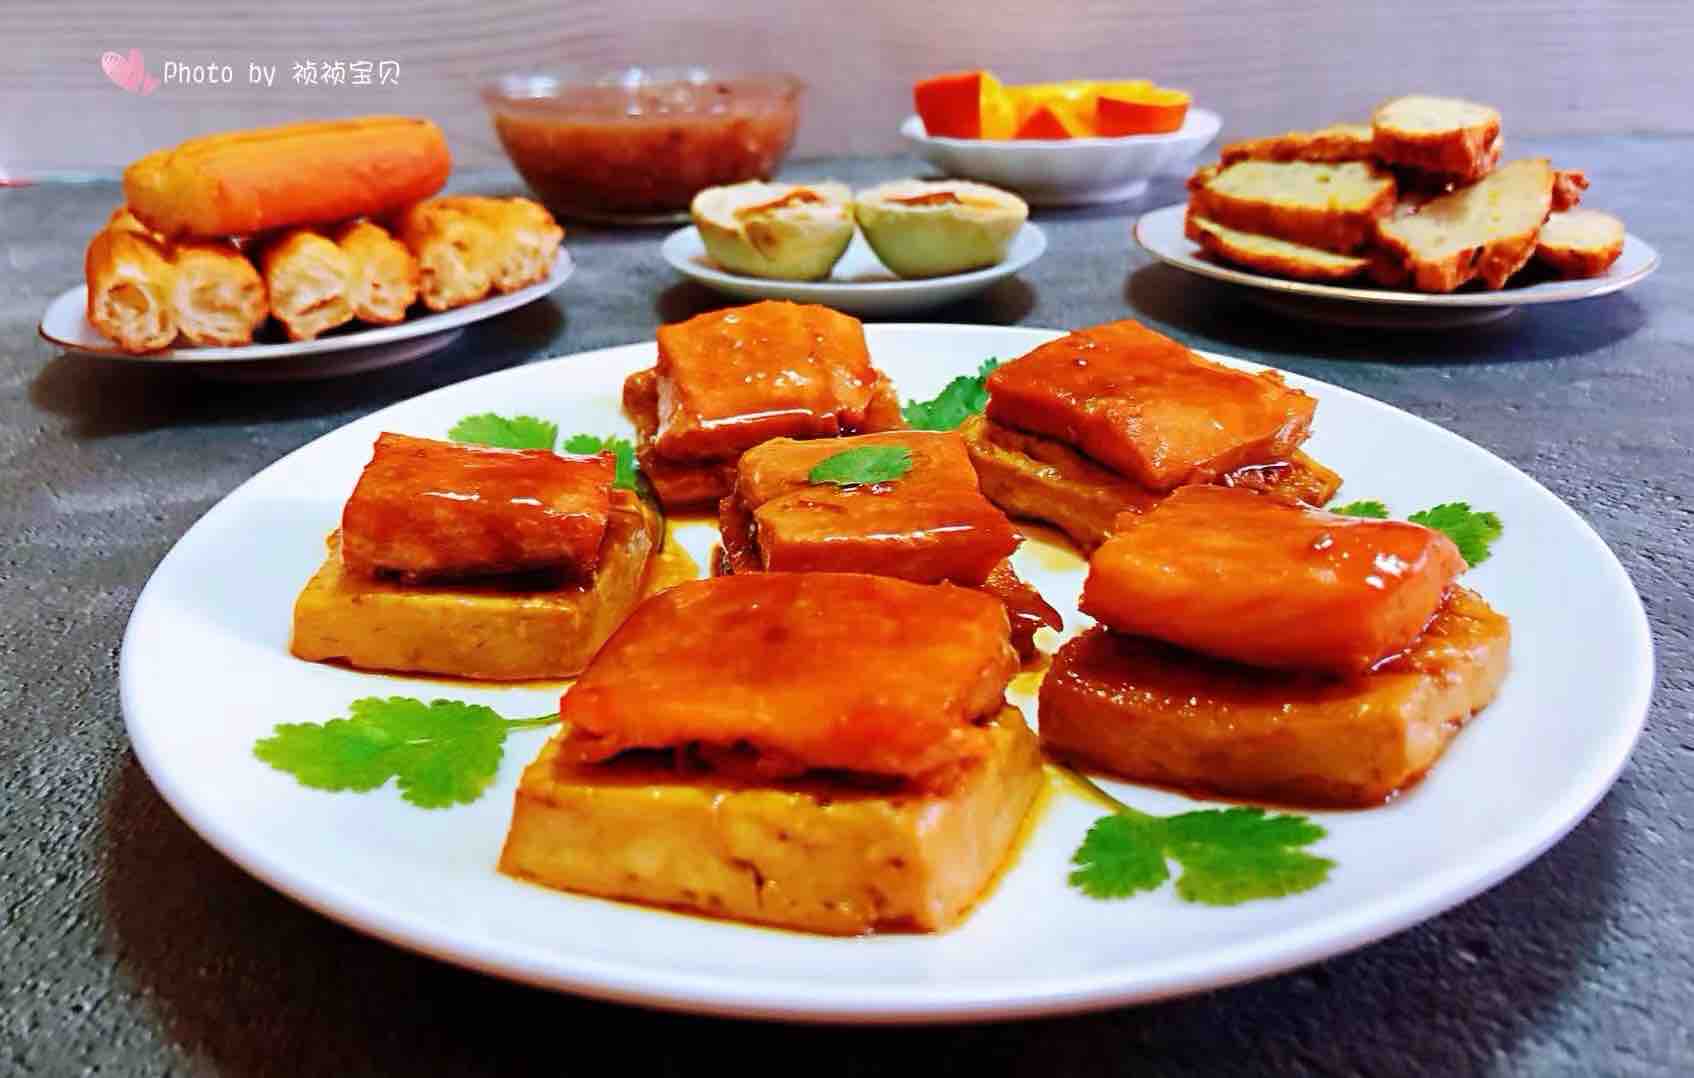 Teriyaki Salmon and Fried Tofu recipe